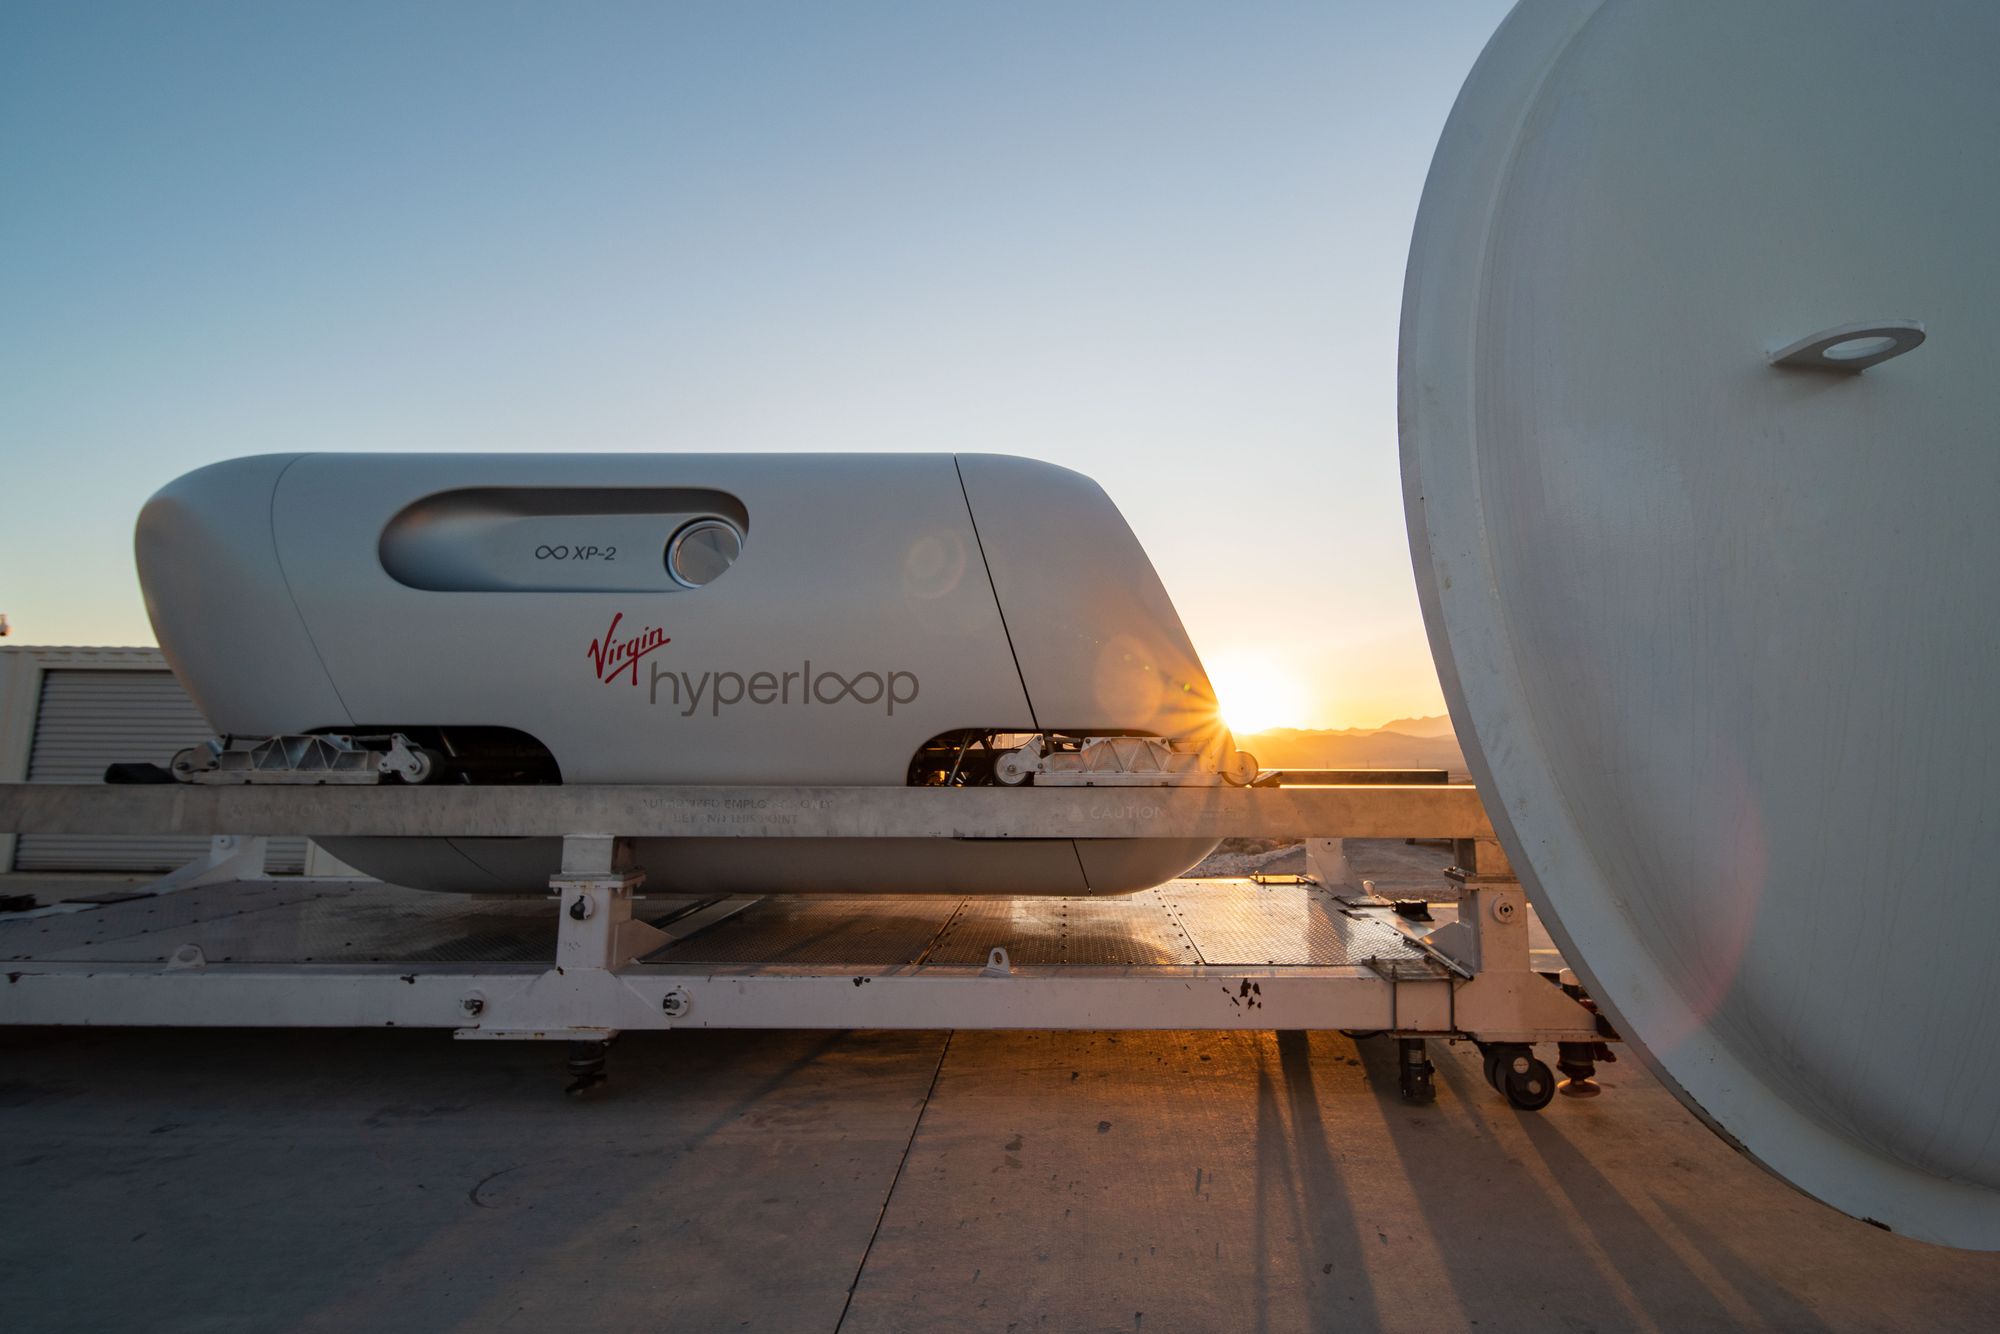 🚇 First passengers ever ride the Hyperloop